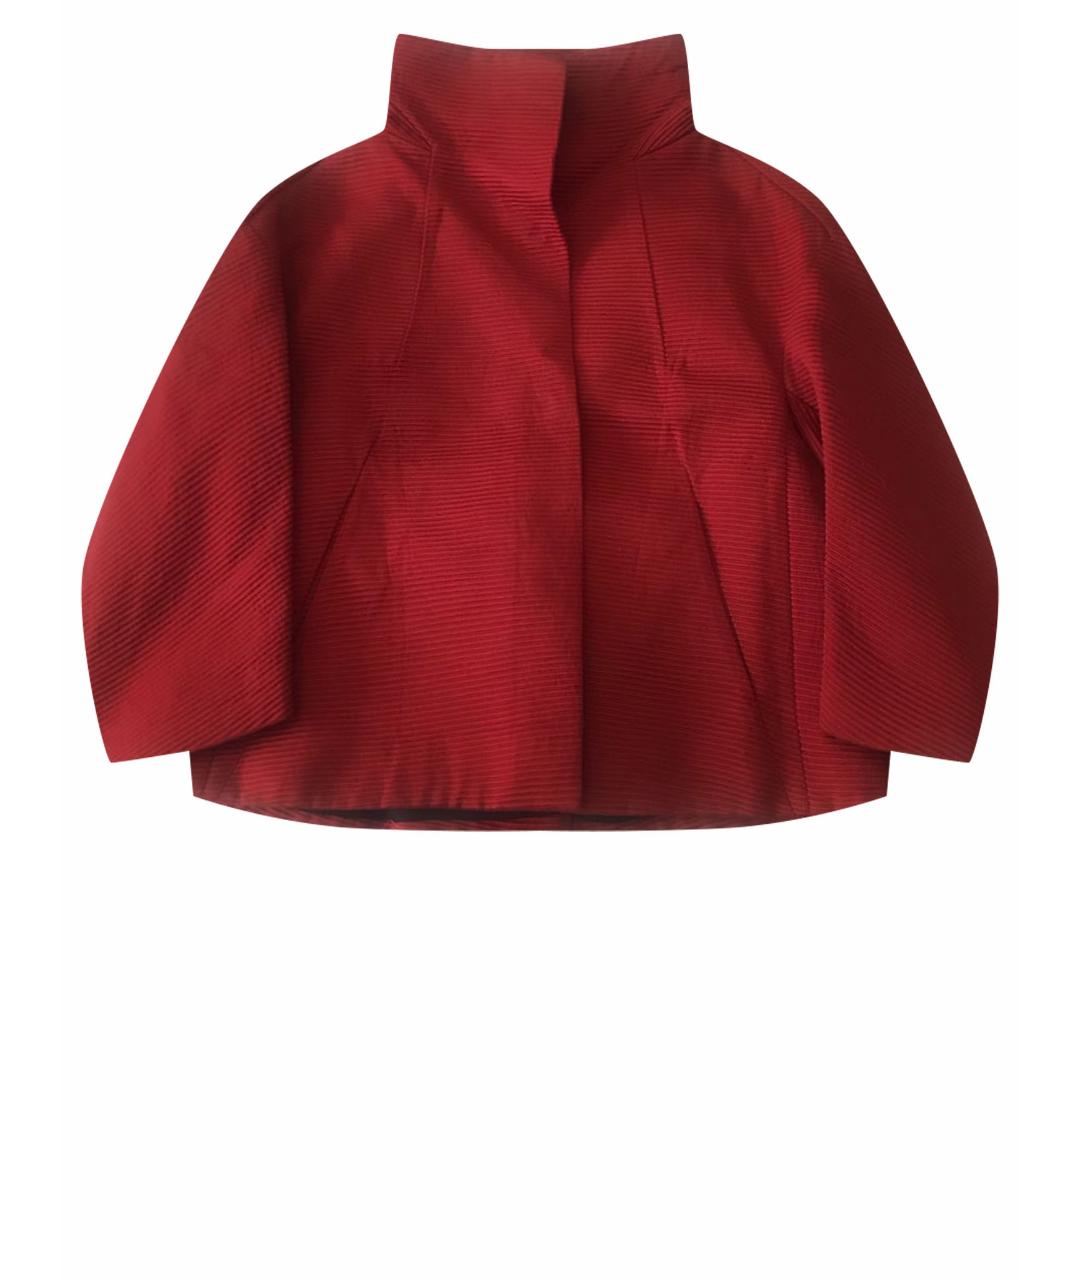 GIANFRANCO FERRE Красная куртка, фото 1